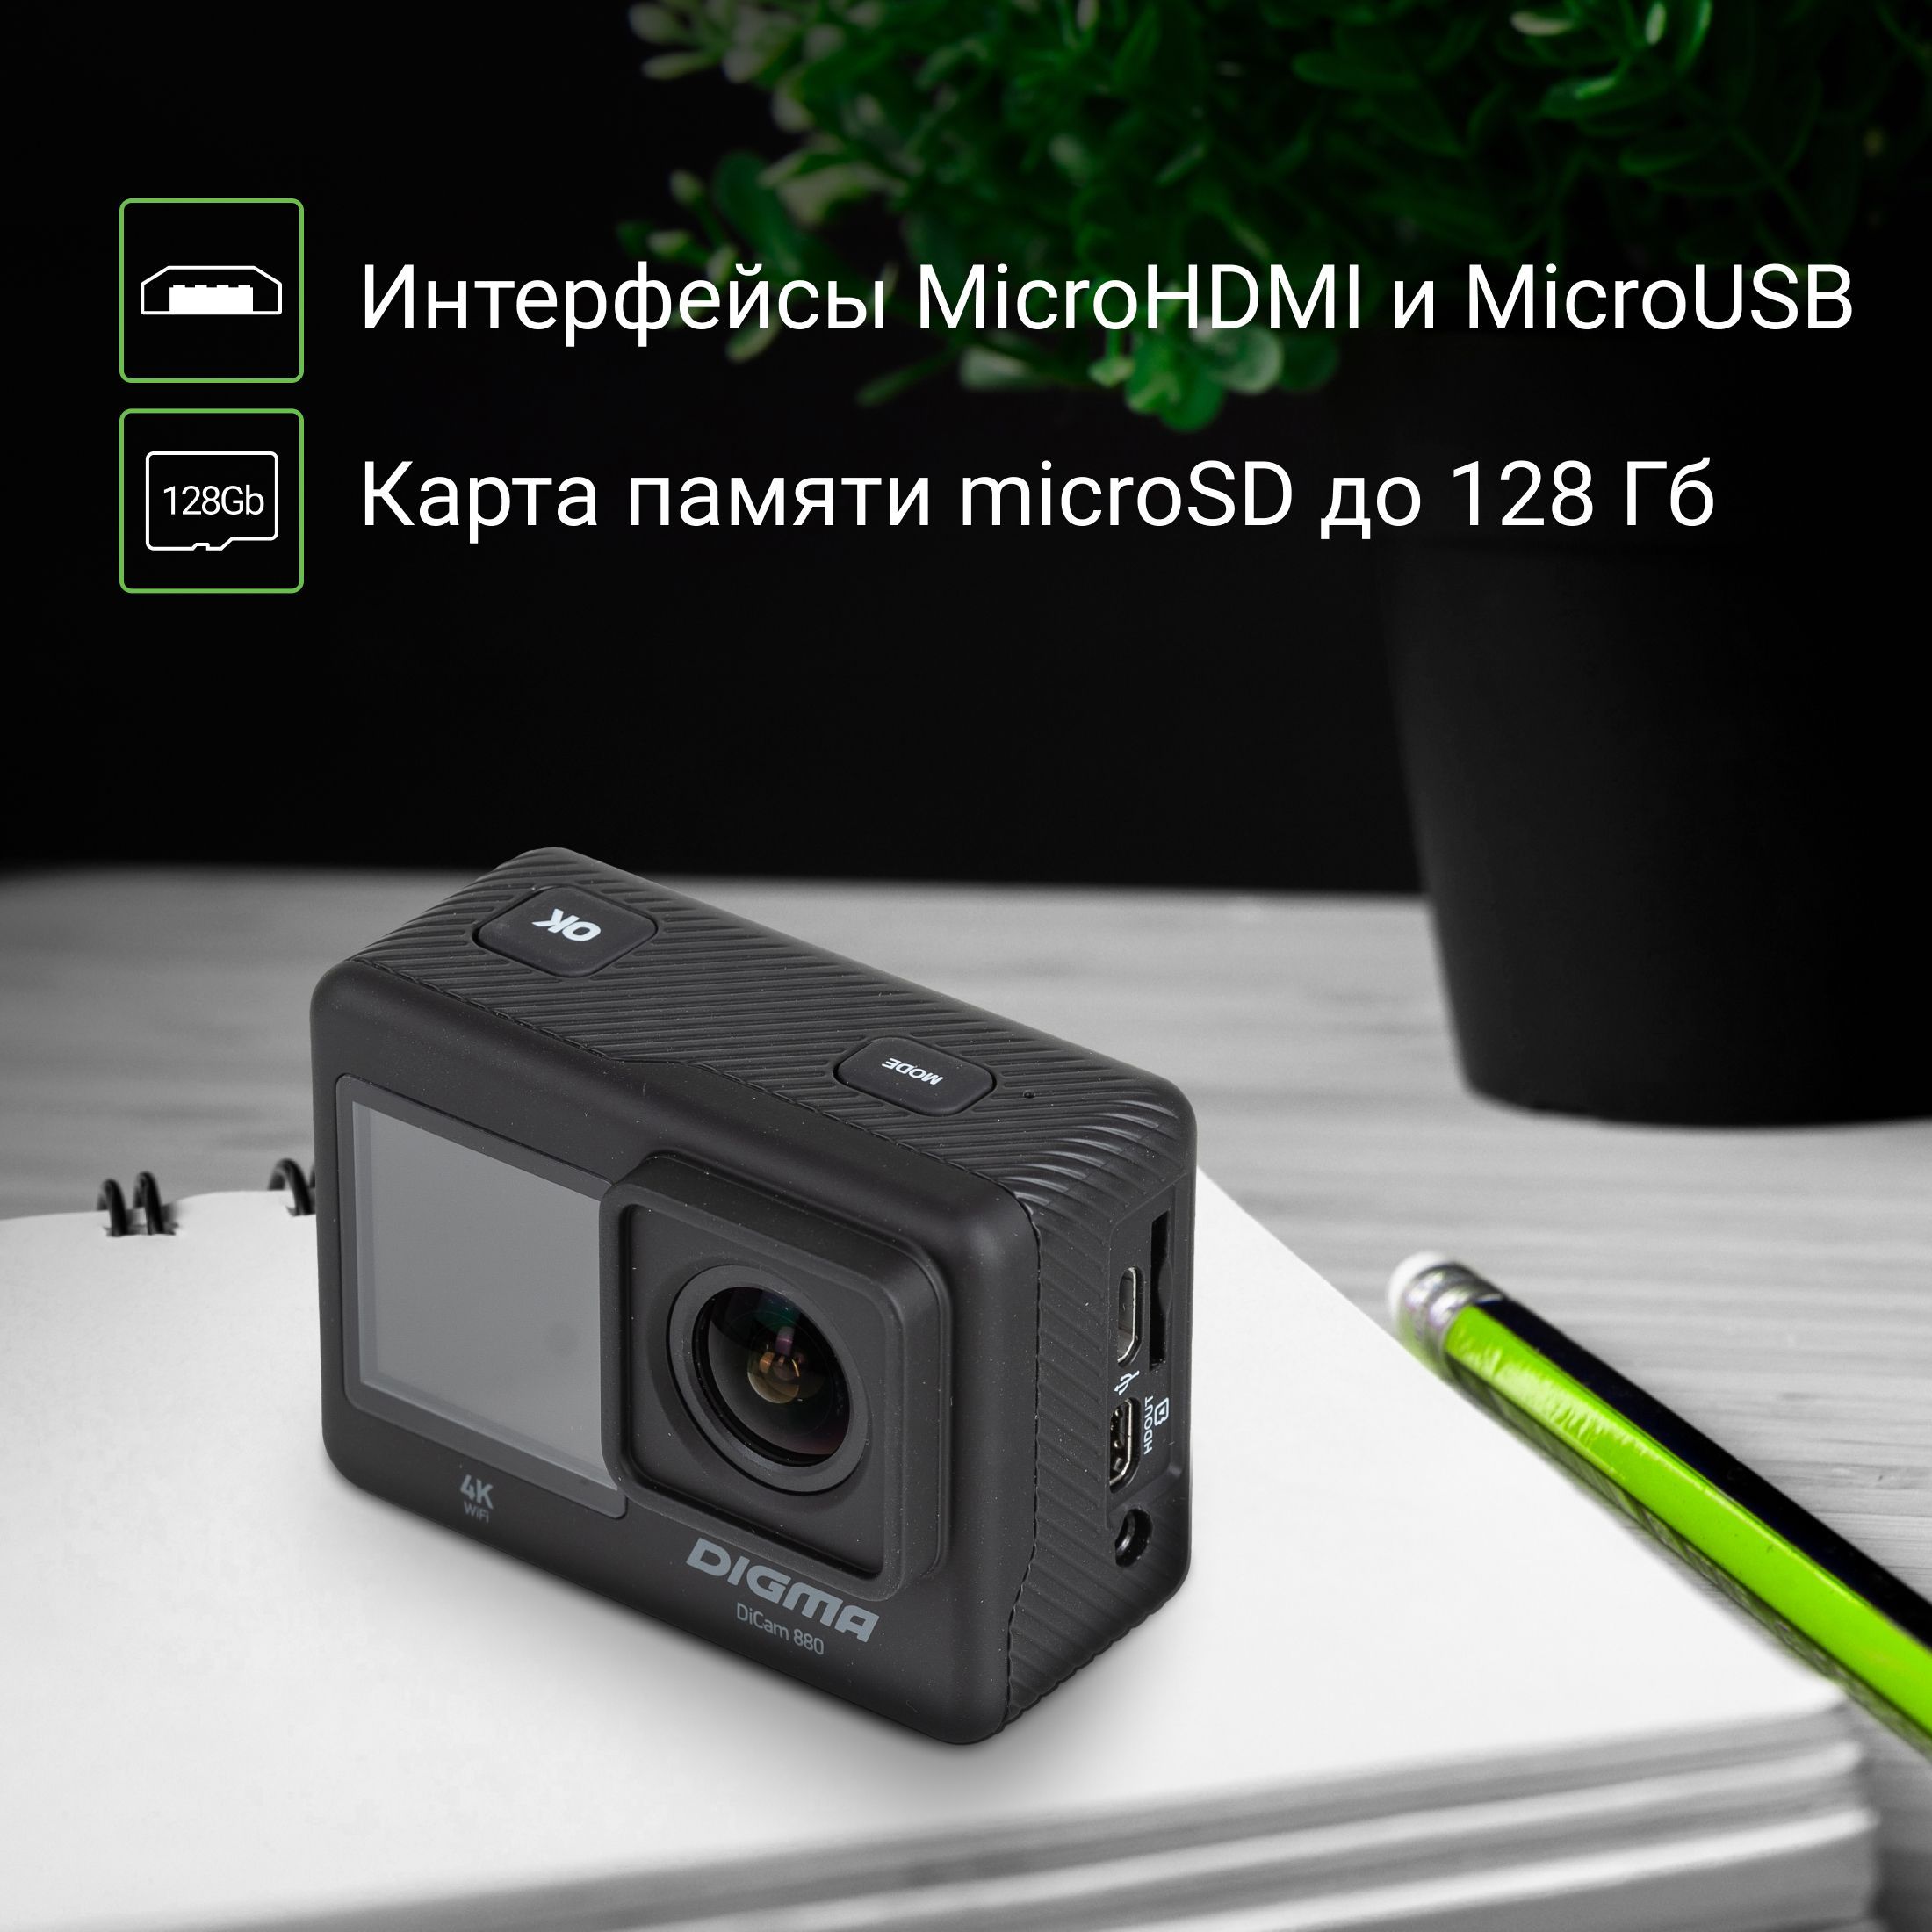 Экшн-Камера Digma 880